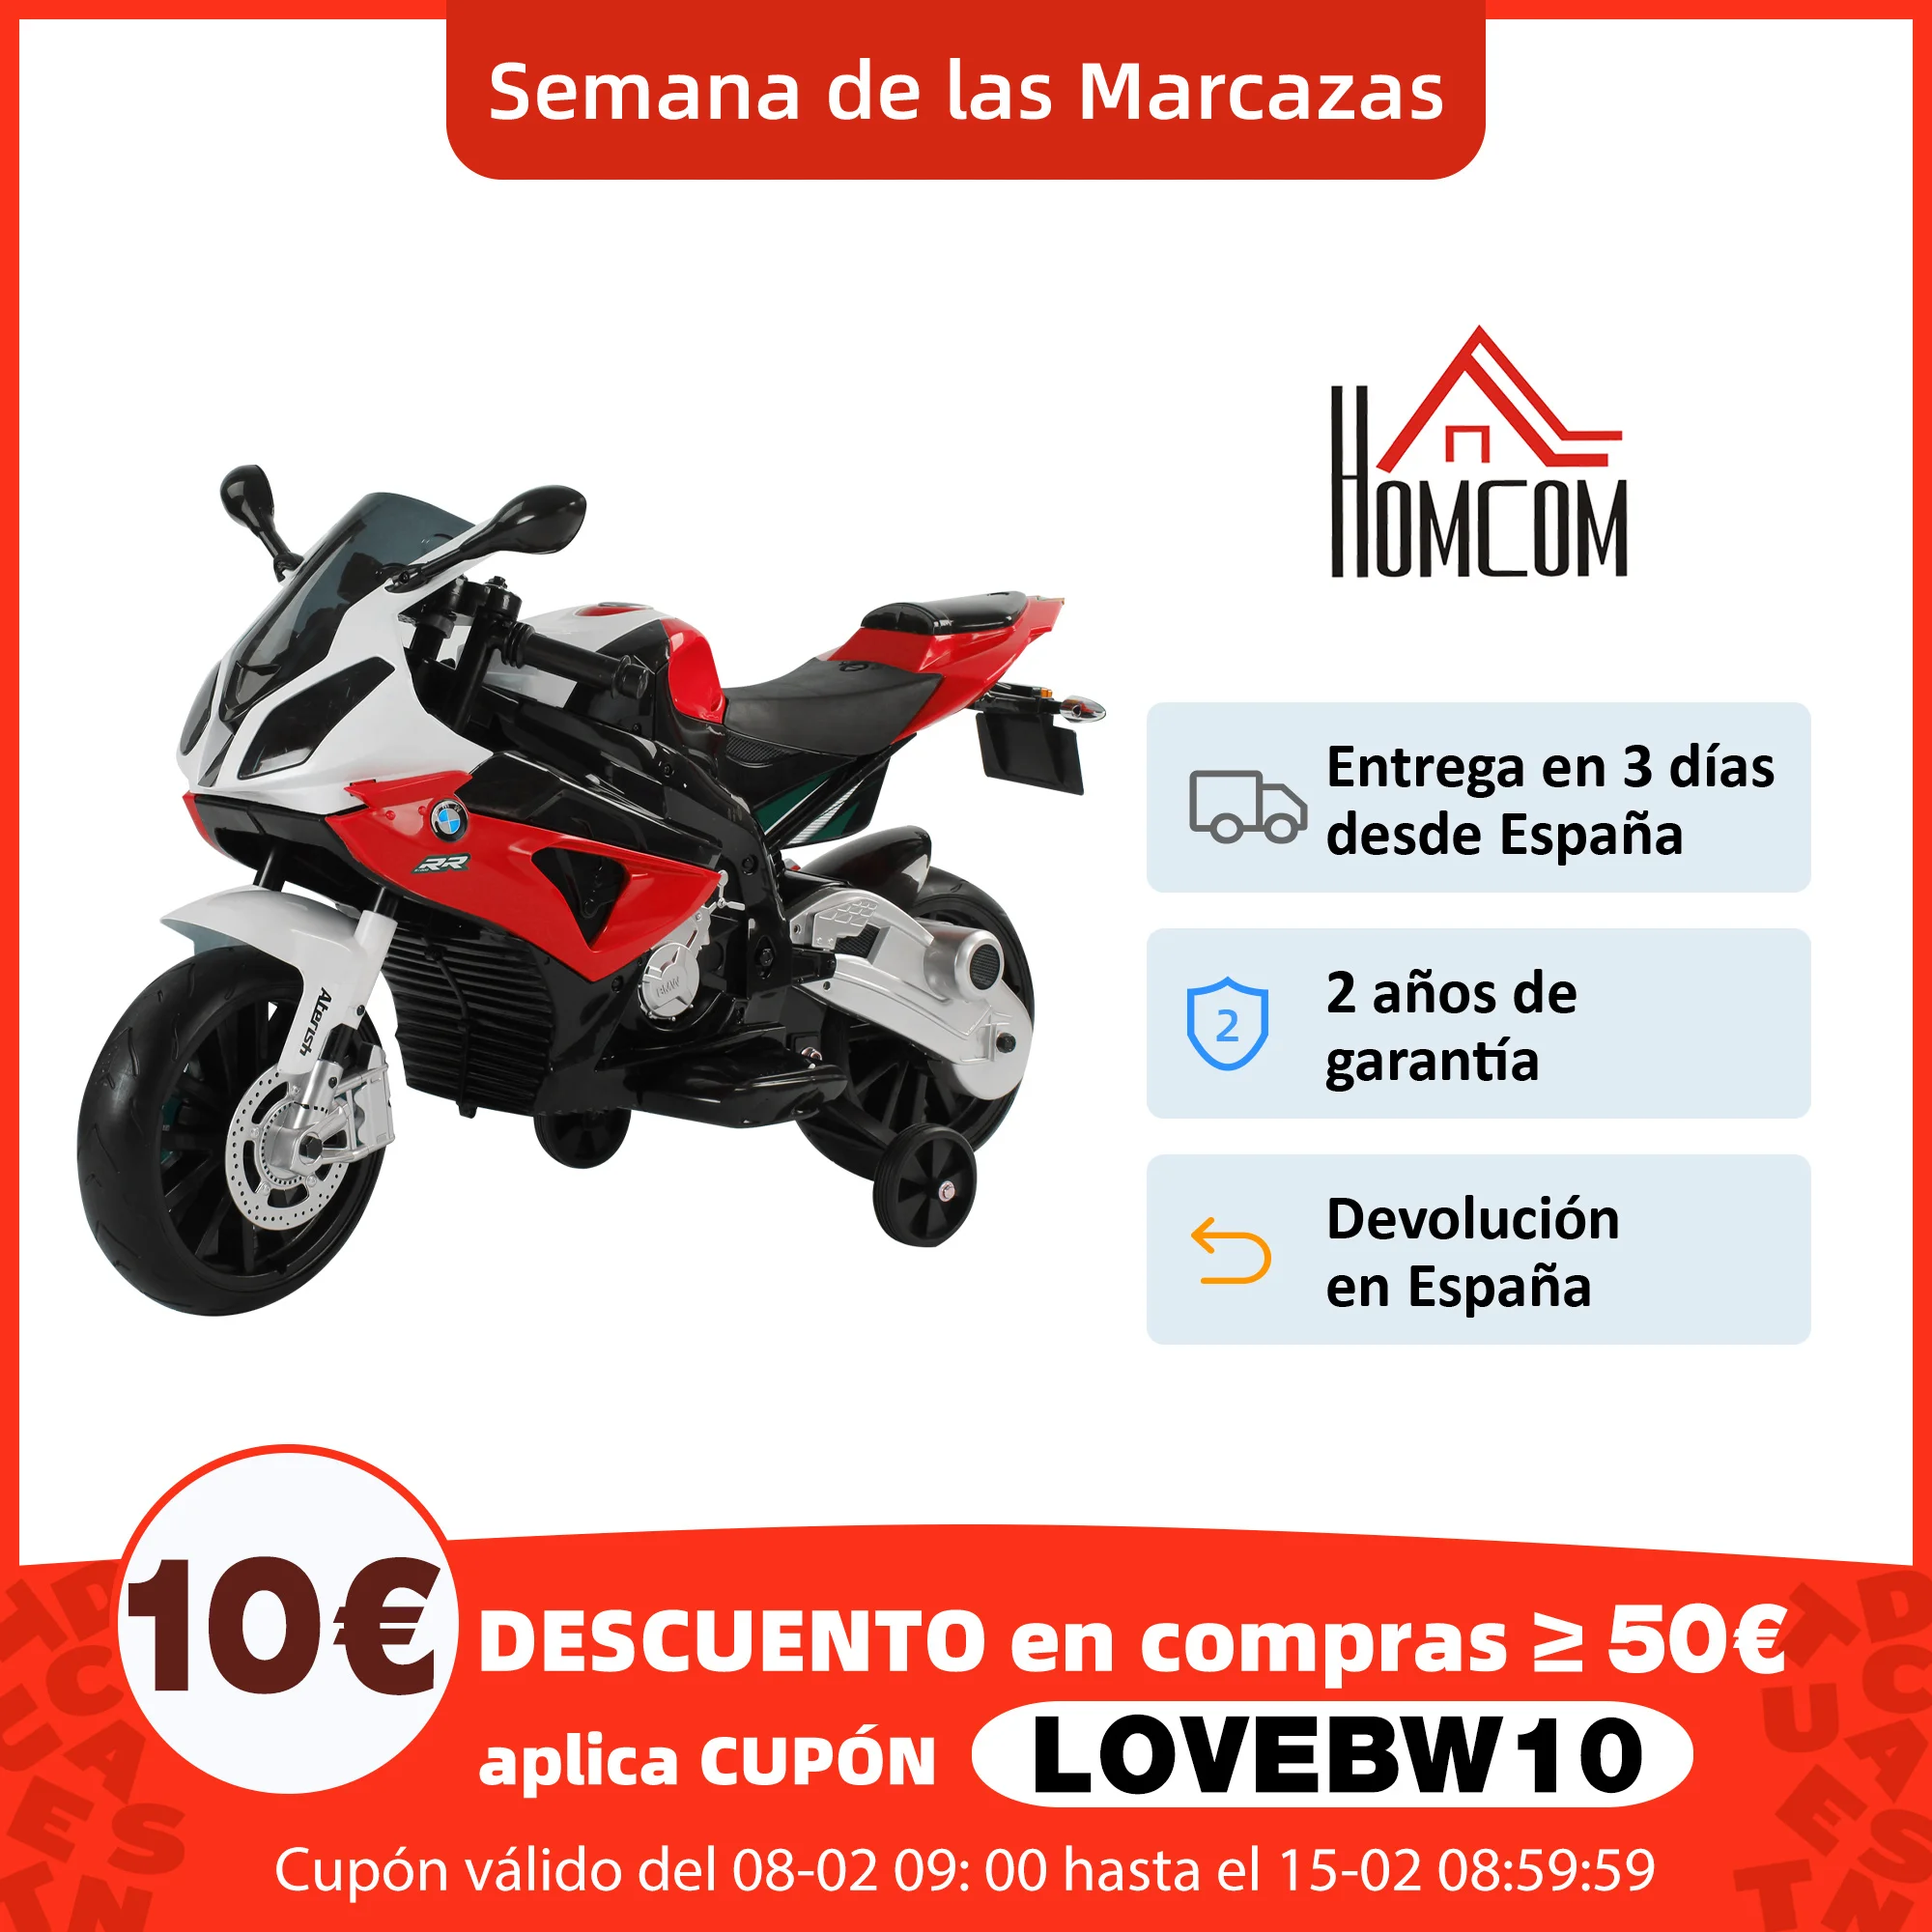 HOMCOM Coche Correpasillos Ninos 3-8 anos Moto Electrica Infantil Bateria 12V Doble Motorinių con Luces y Sonidos 110x47x69cm